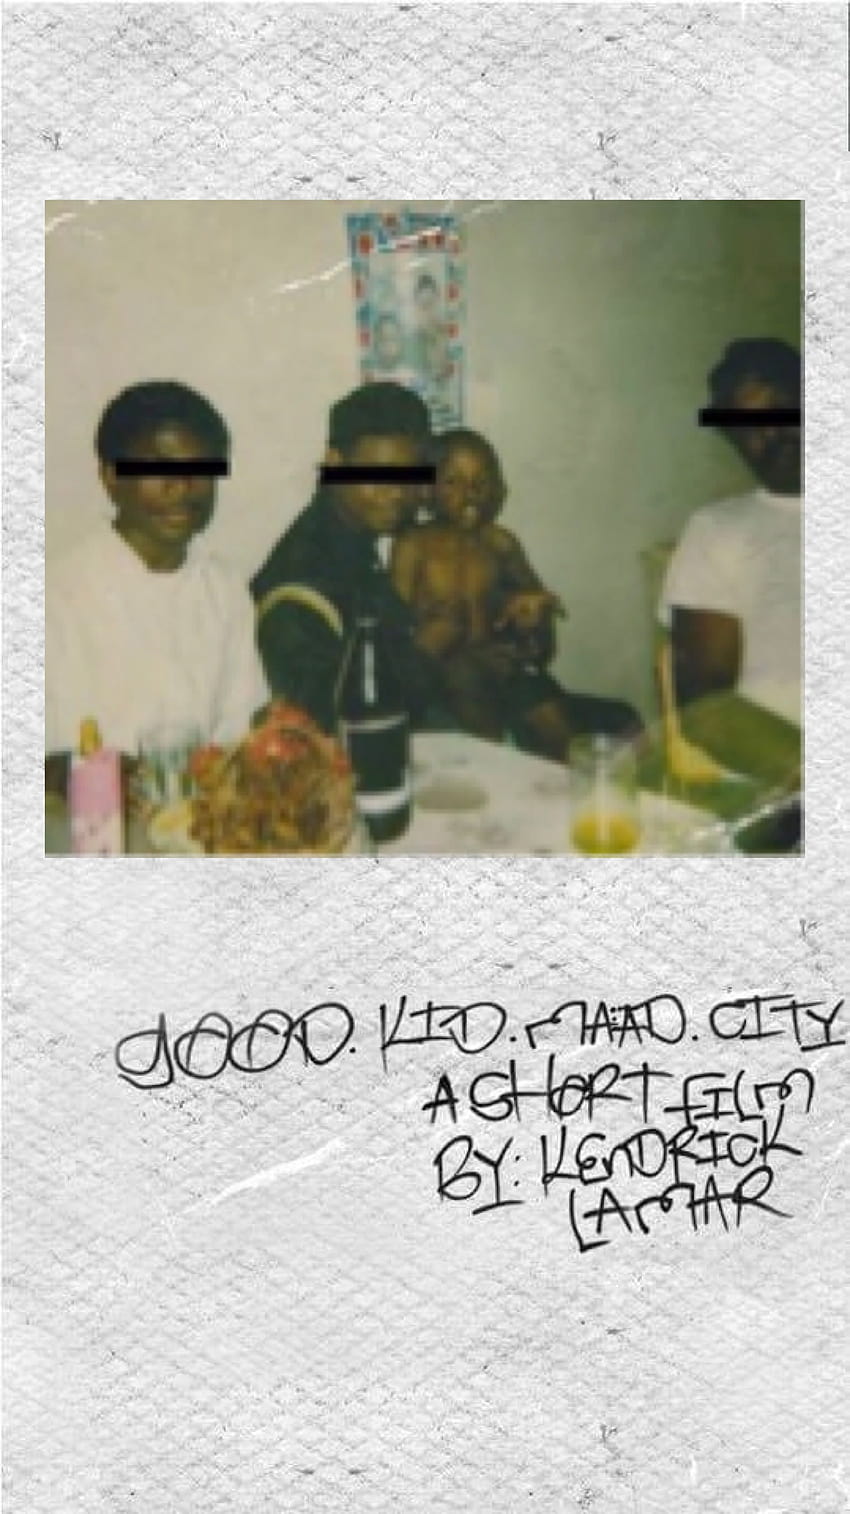 Kendrick Lamar: Good Kid, M.A.A.D City for iPhone 6/6S/7, good kid maad city HD phone wallpaper